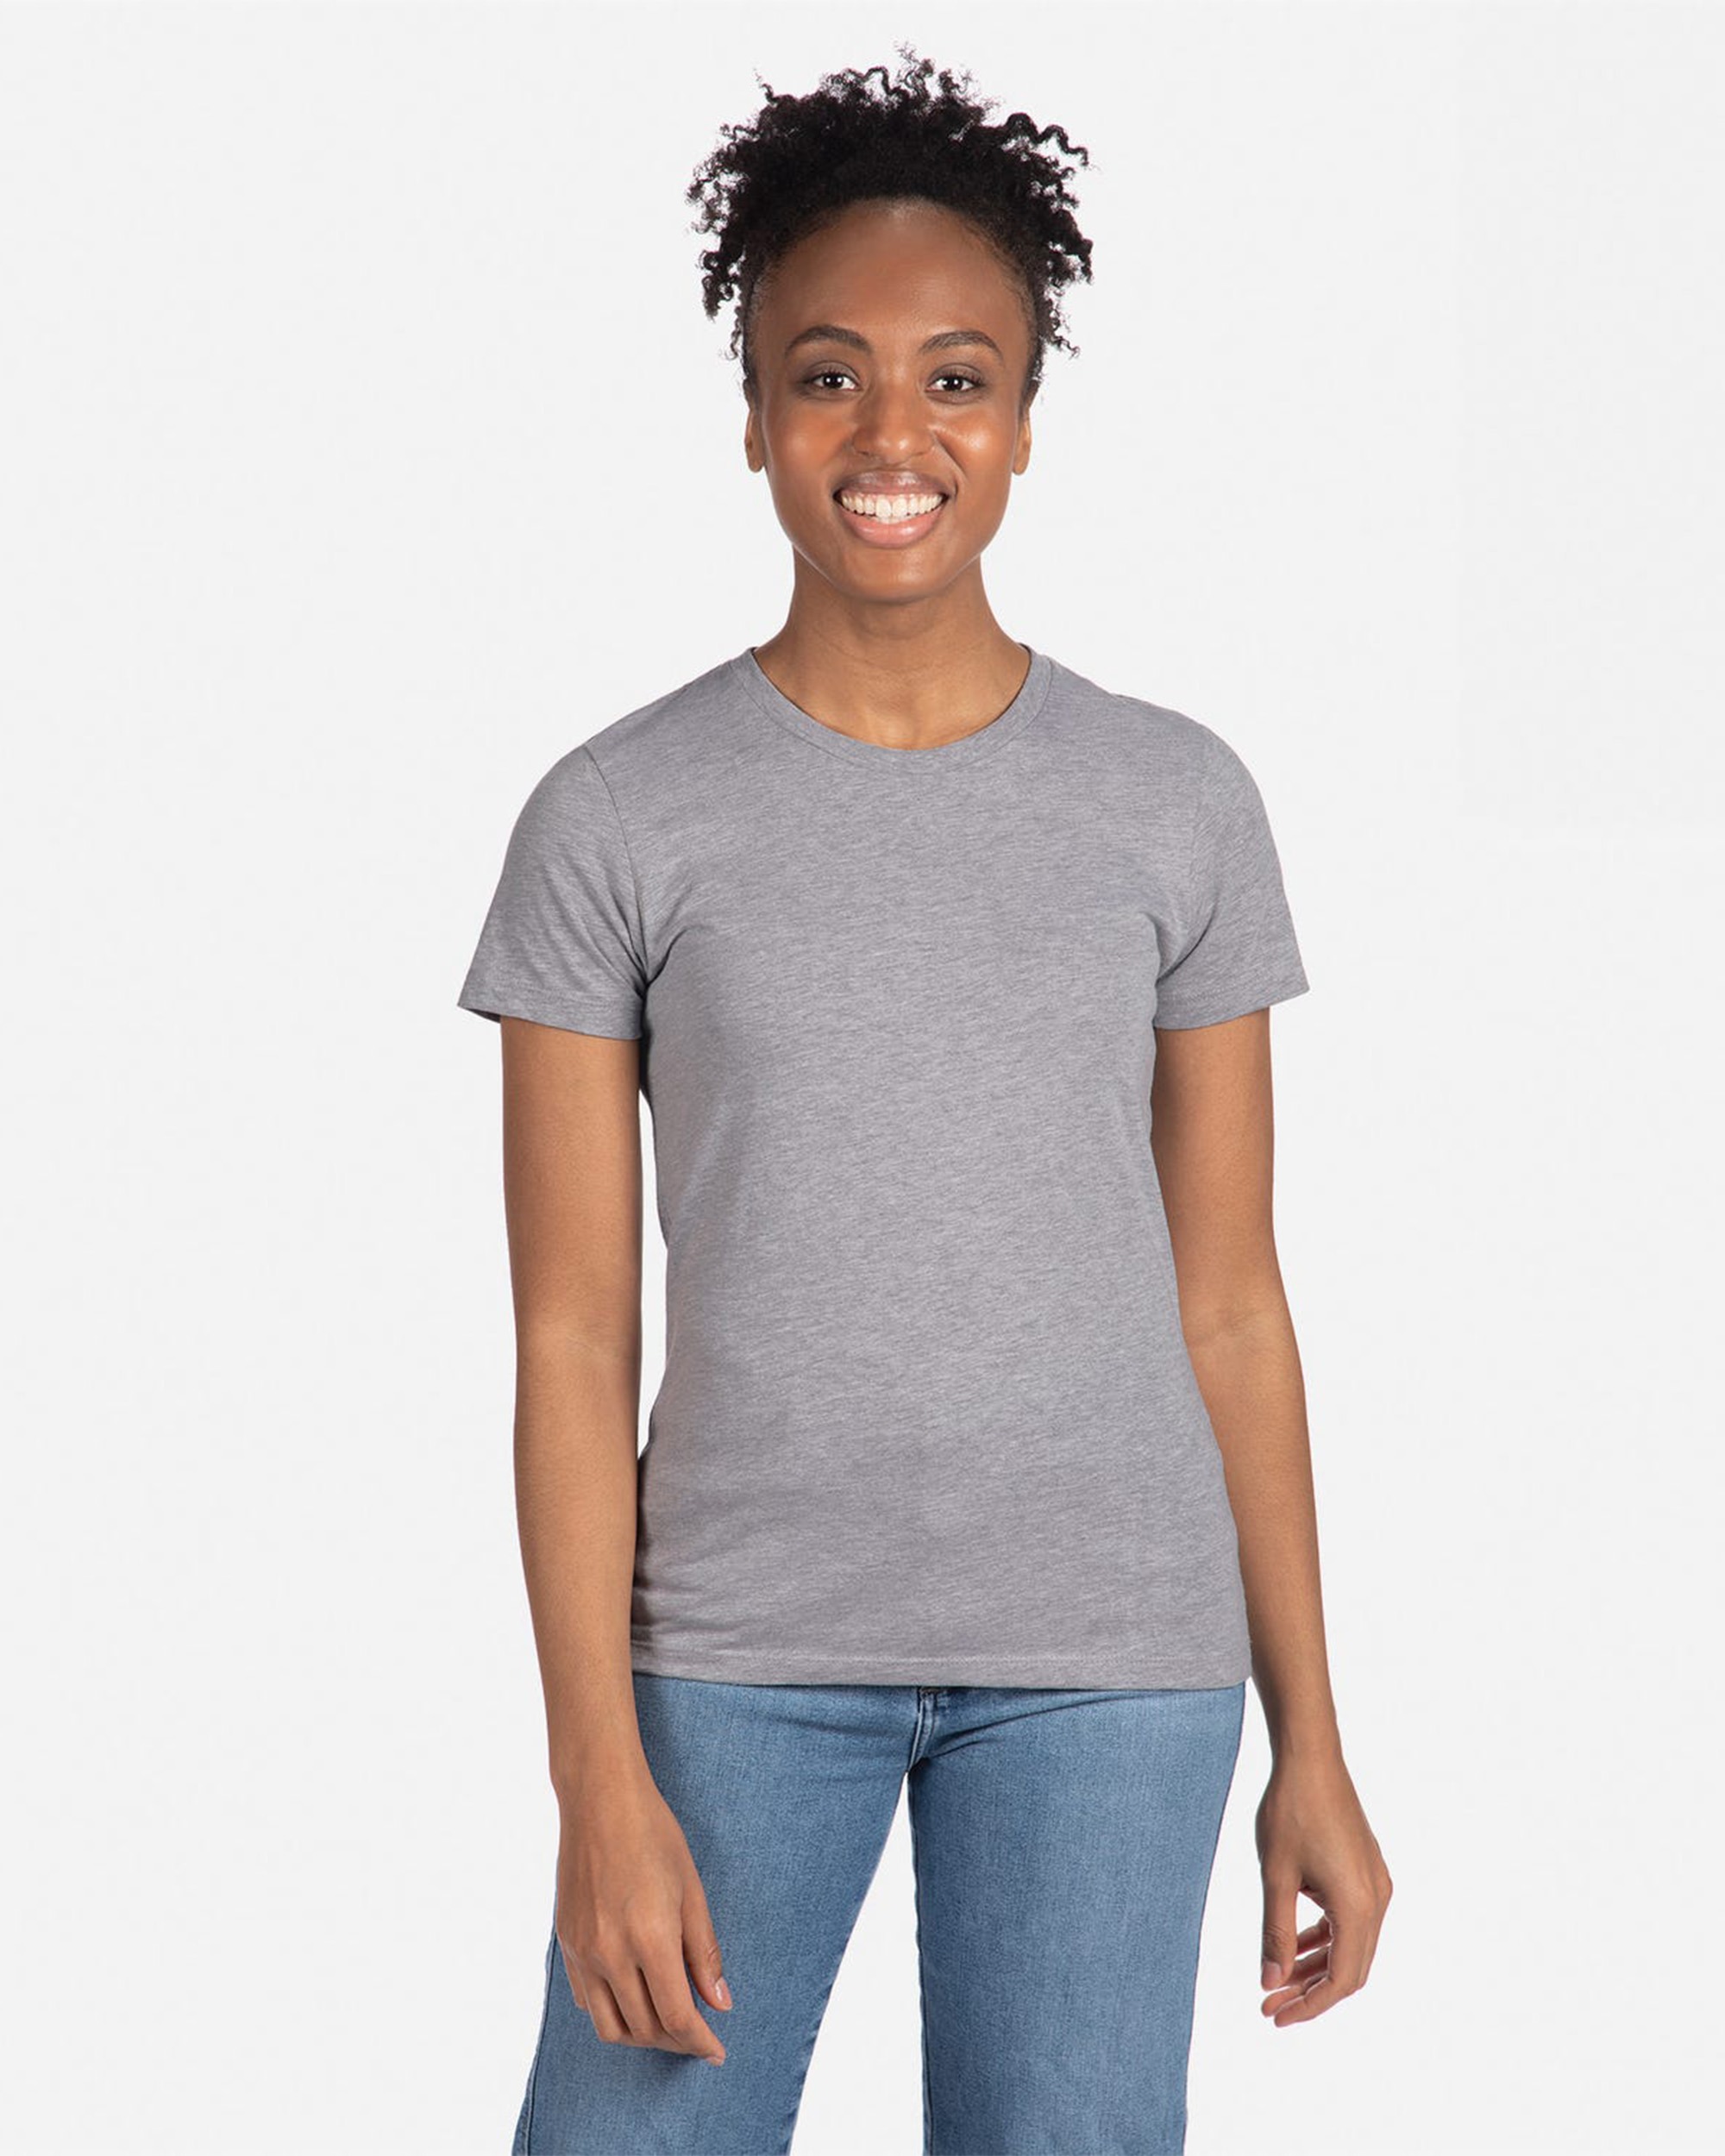 Next Level Apparel® 3900 Women's Boyfriend Cotton T-Shirt